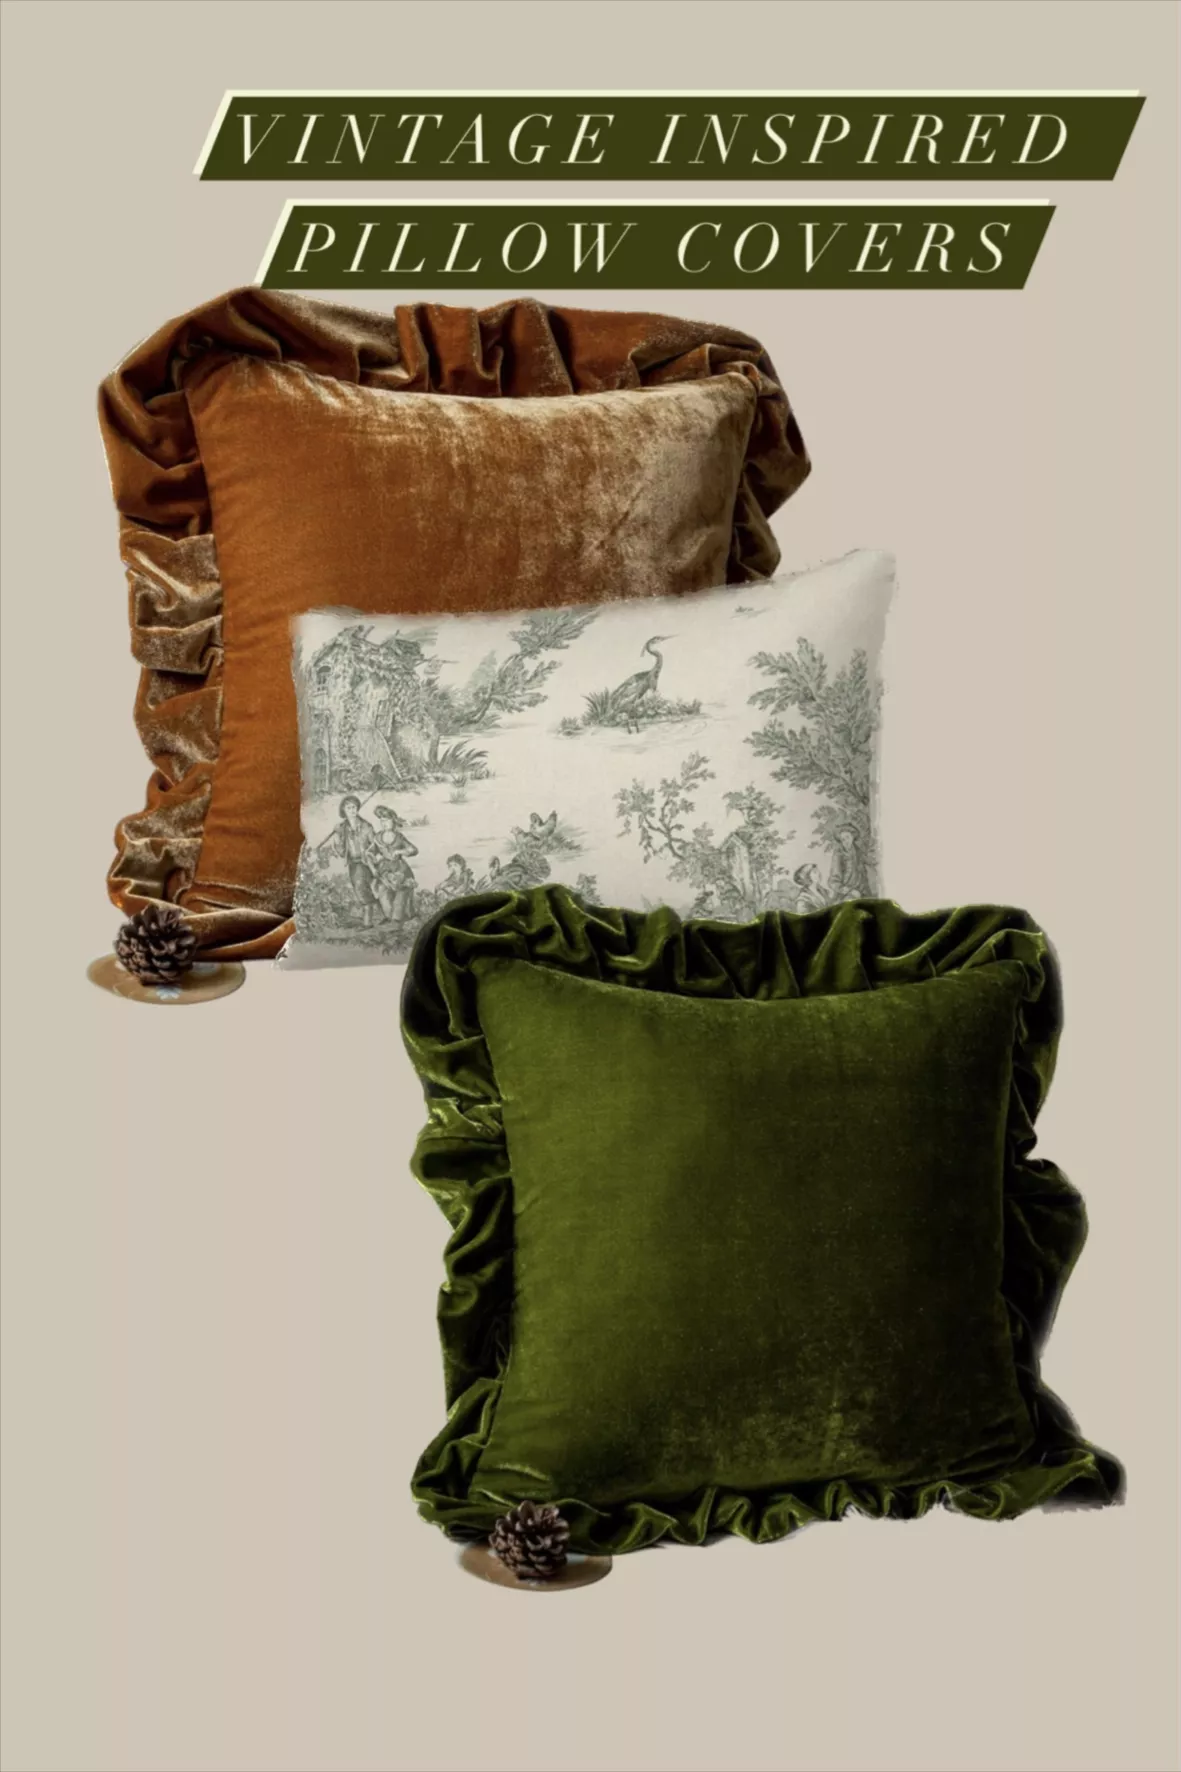  GLORY SEASON Velvet Throw Pillow Cover Soft Decorative